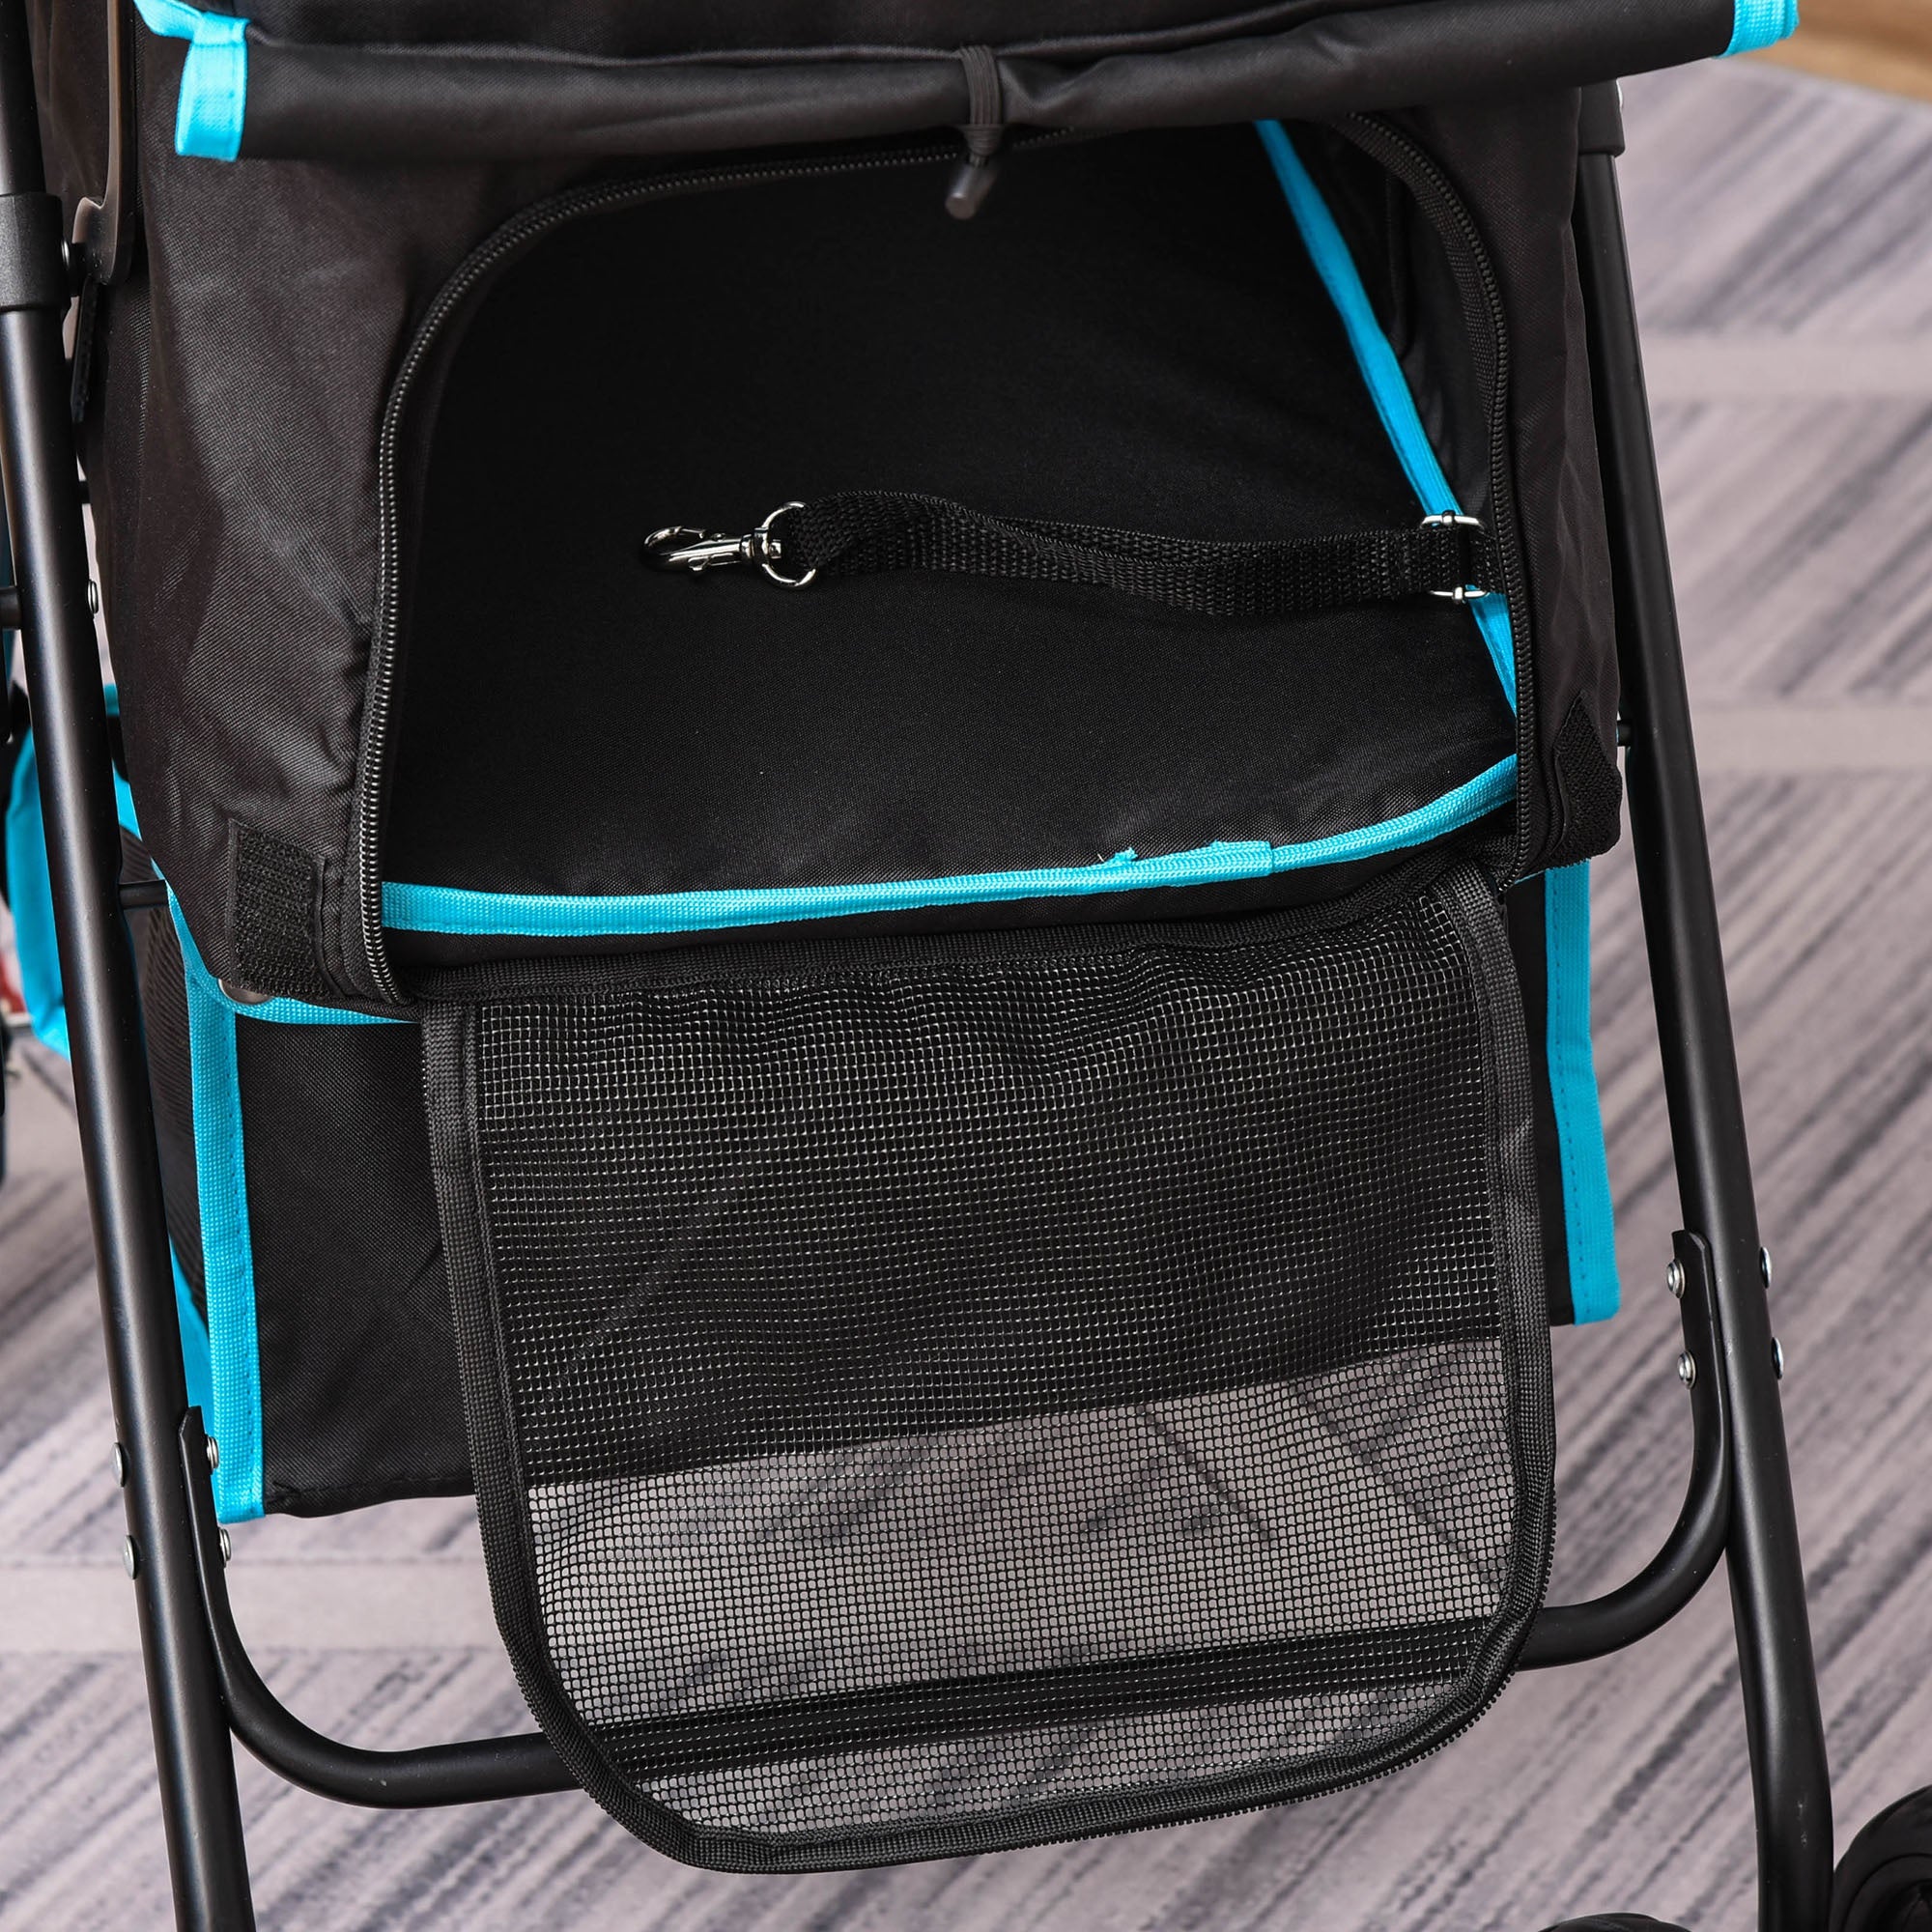 Pet Stroller Foldable Carriage w/ Brake Basket Adjustable Canopy Removable Cloth